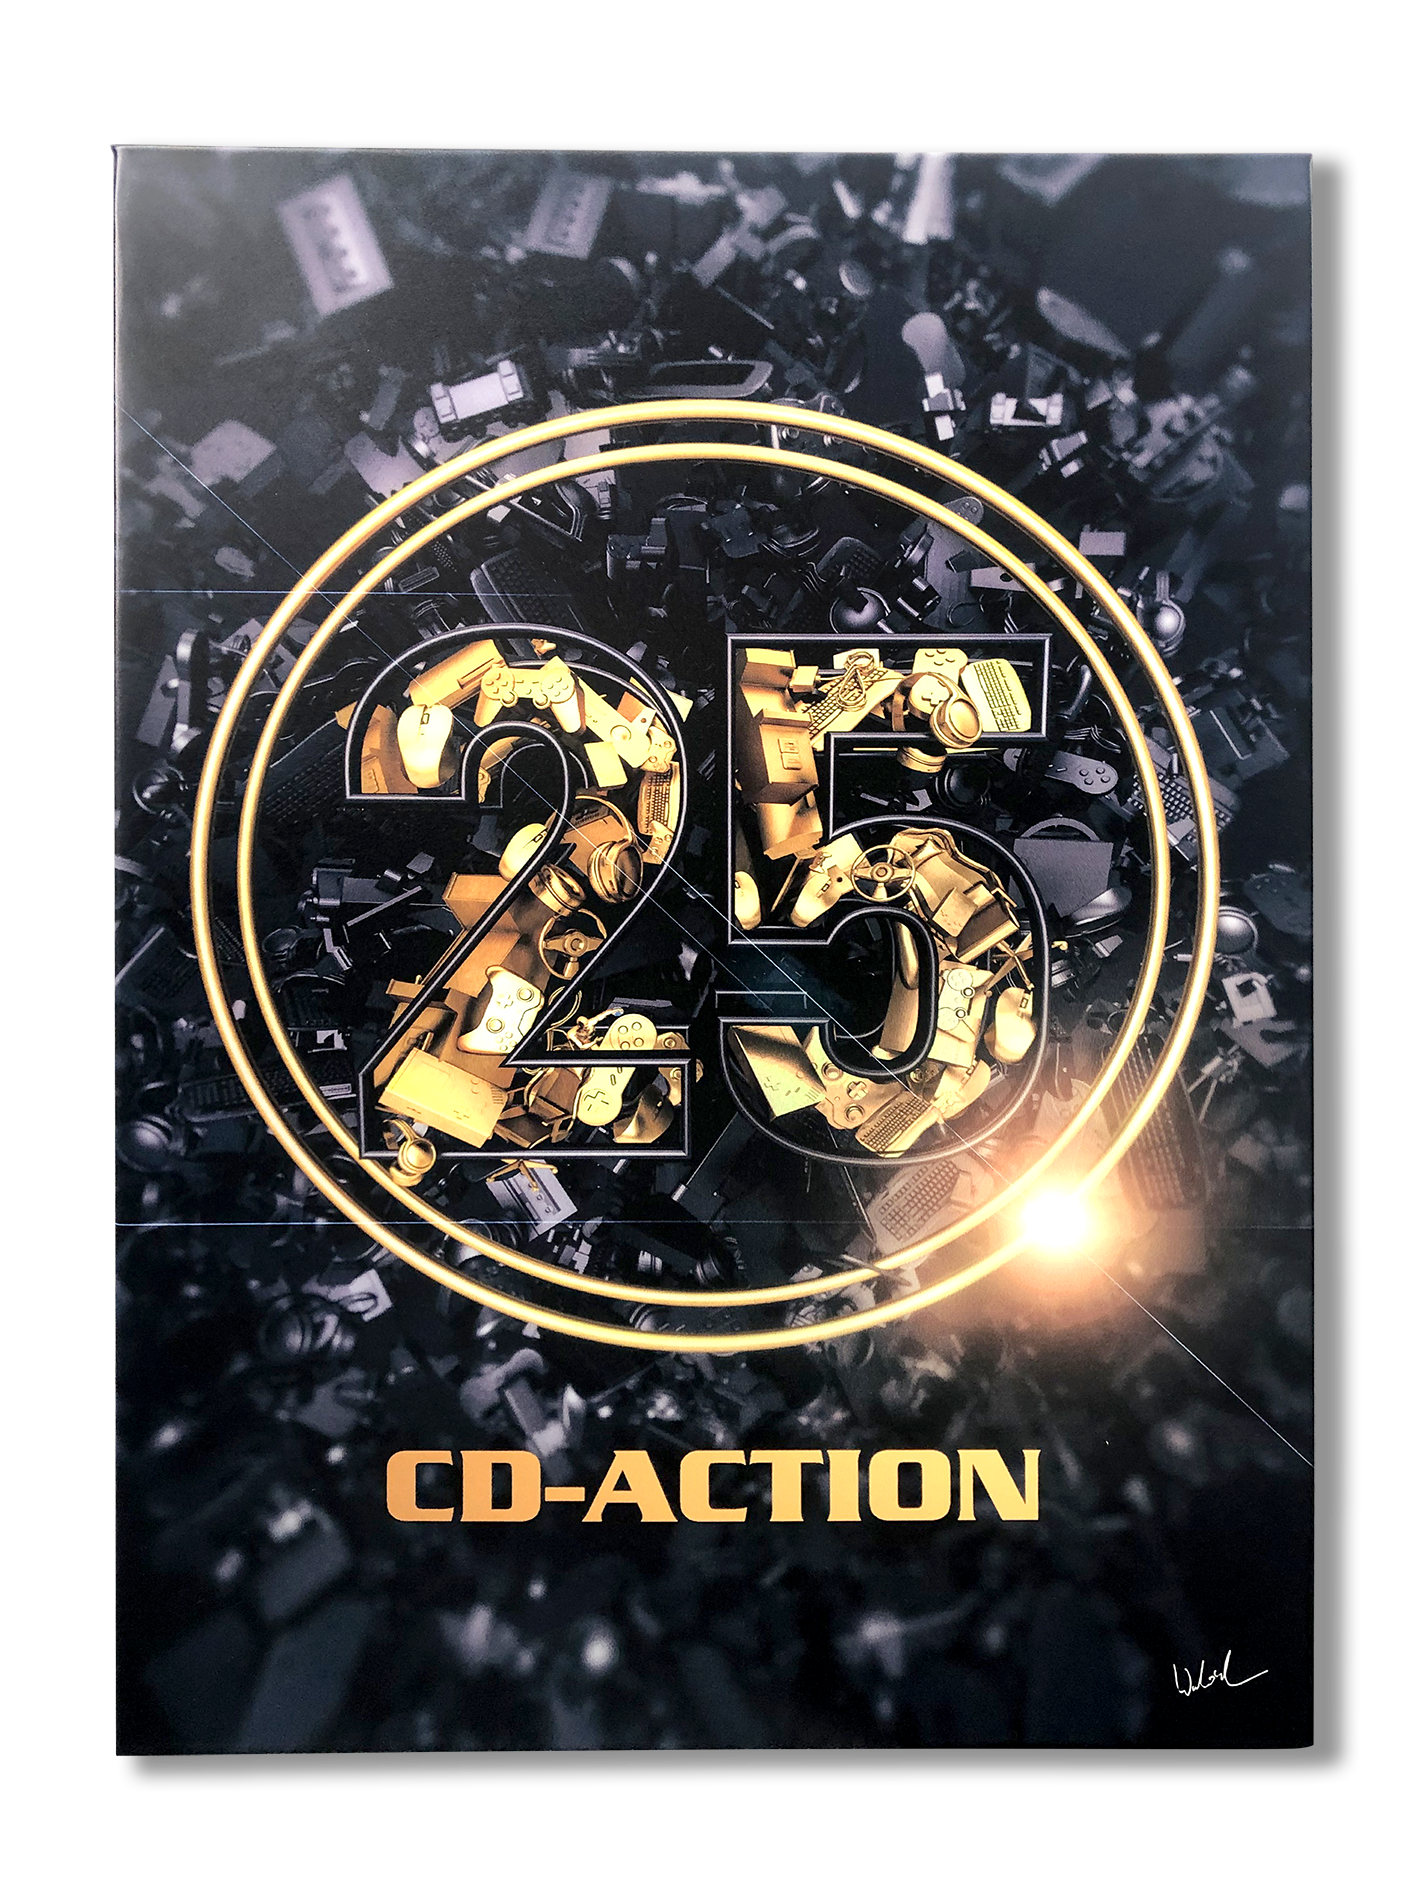 Metalowy plakat 25 lat CD-Action, edycja limitowana,blacha